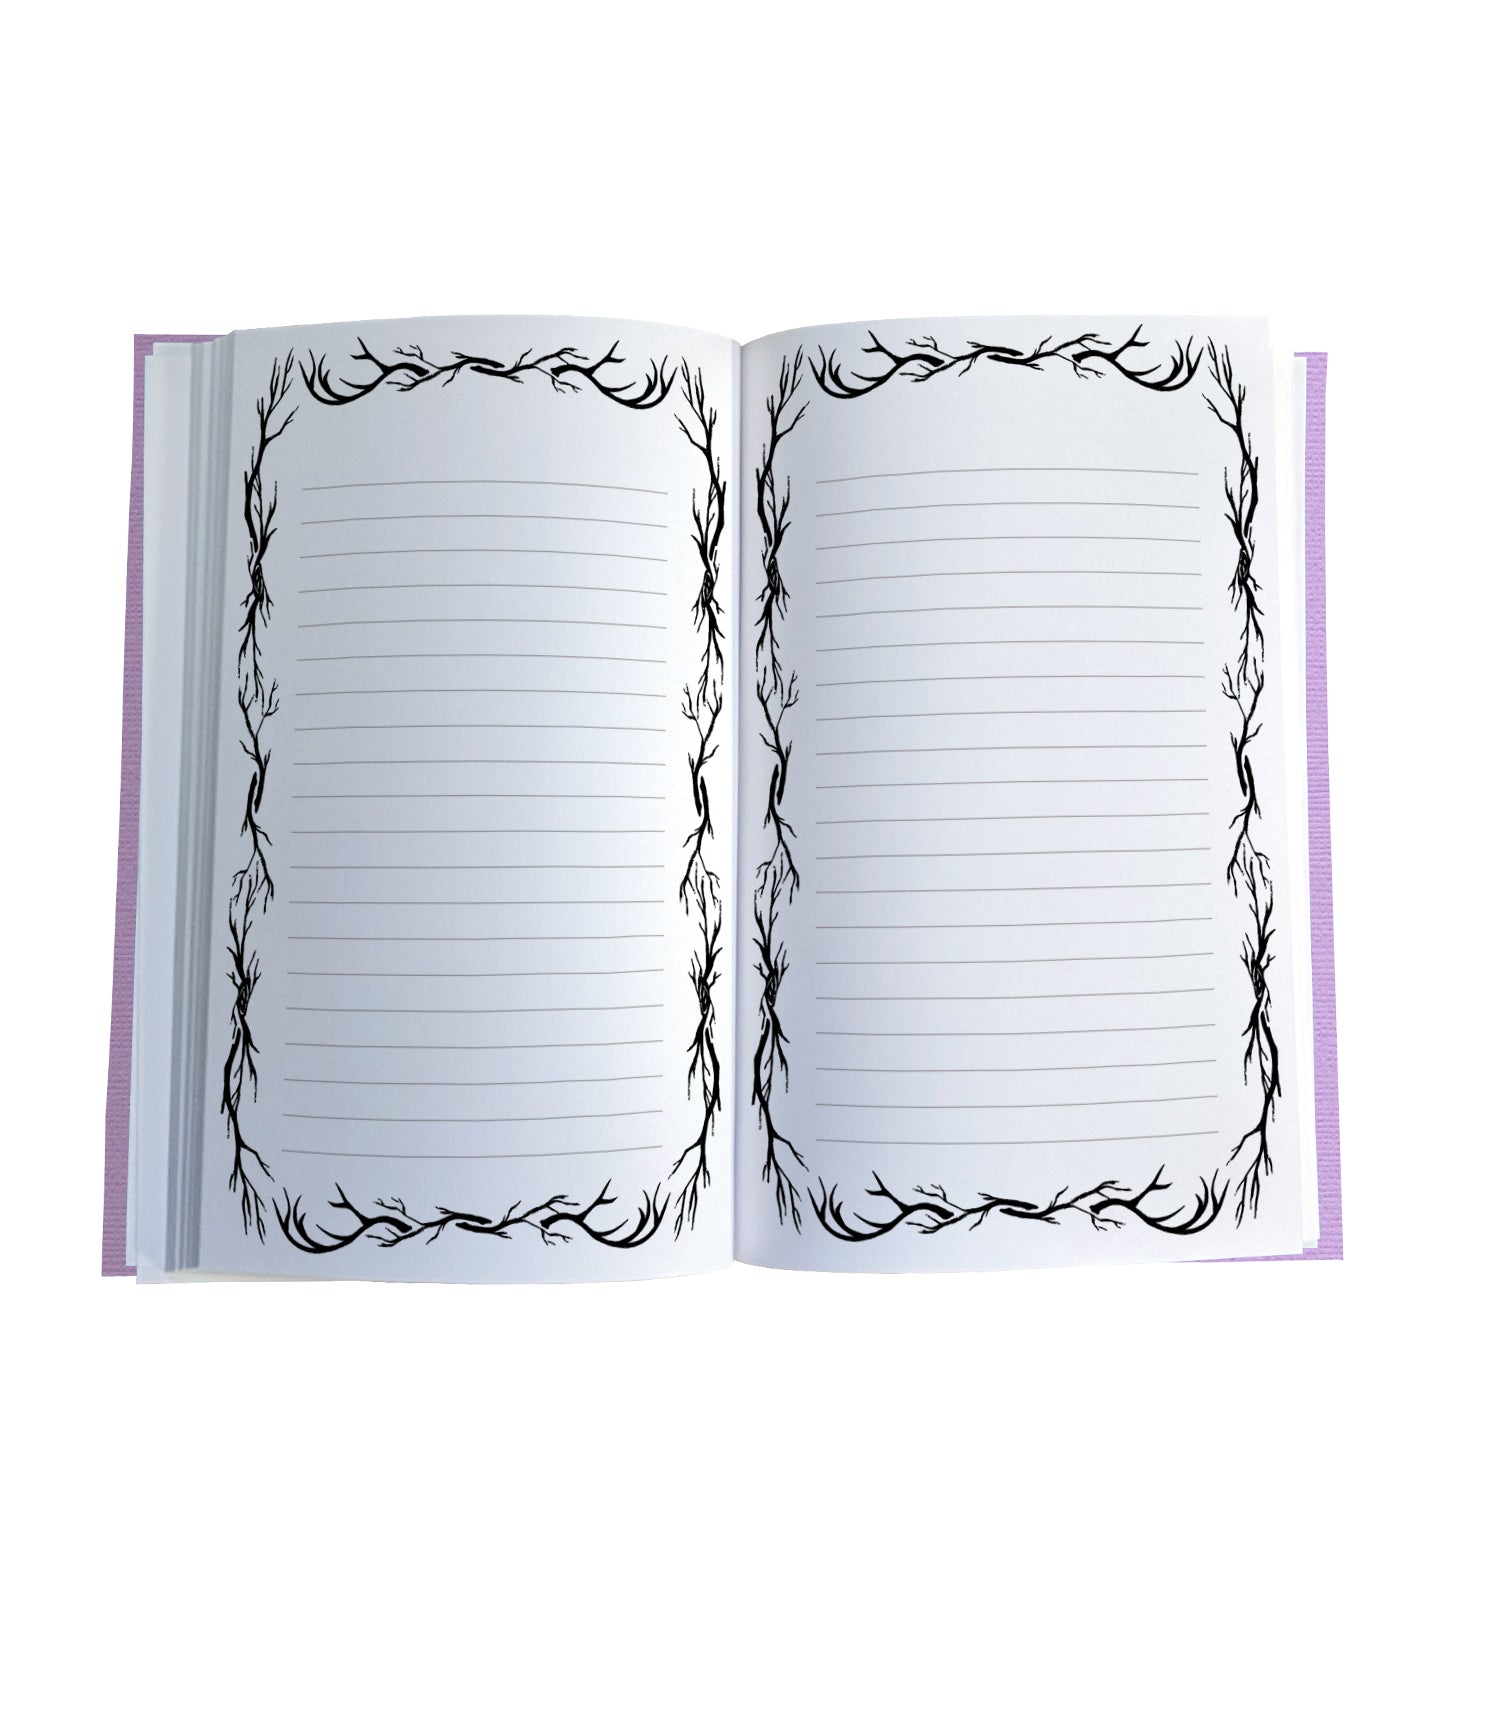 Antler Bordered Lined Magnetic Journal Refill, lavender cover color